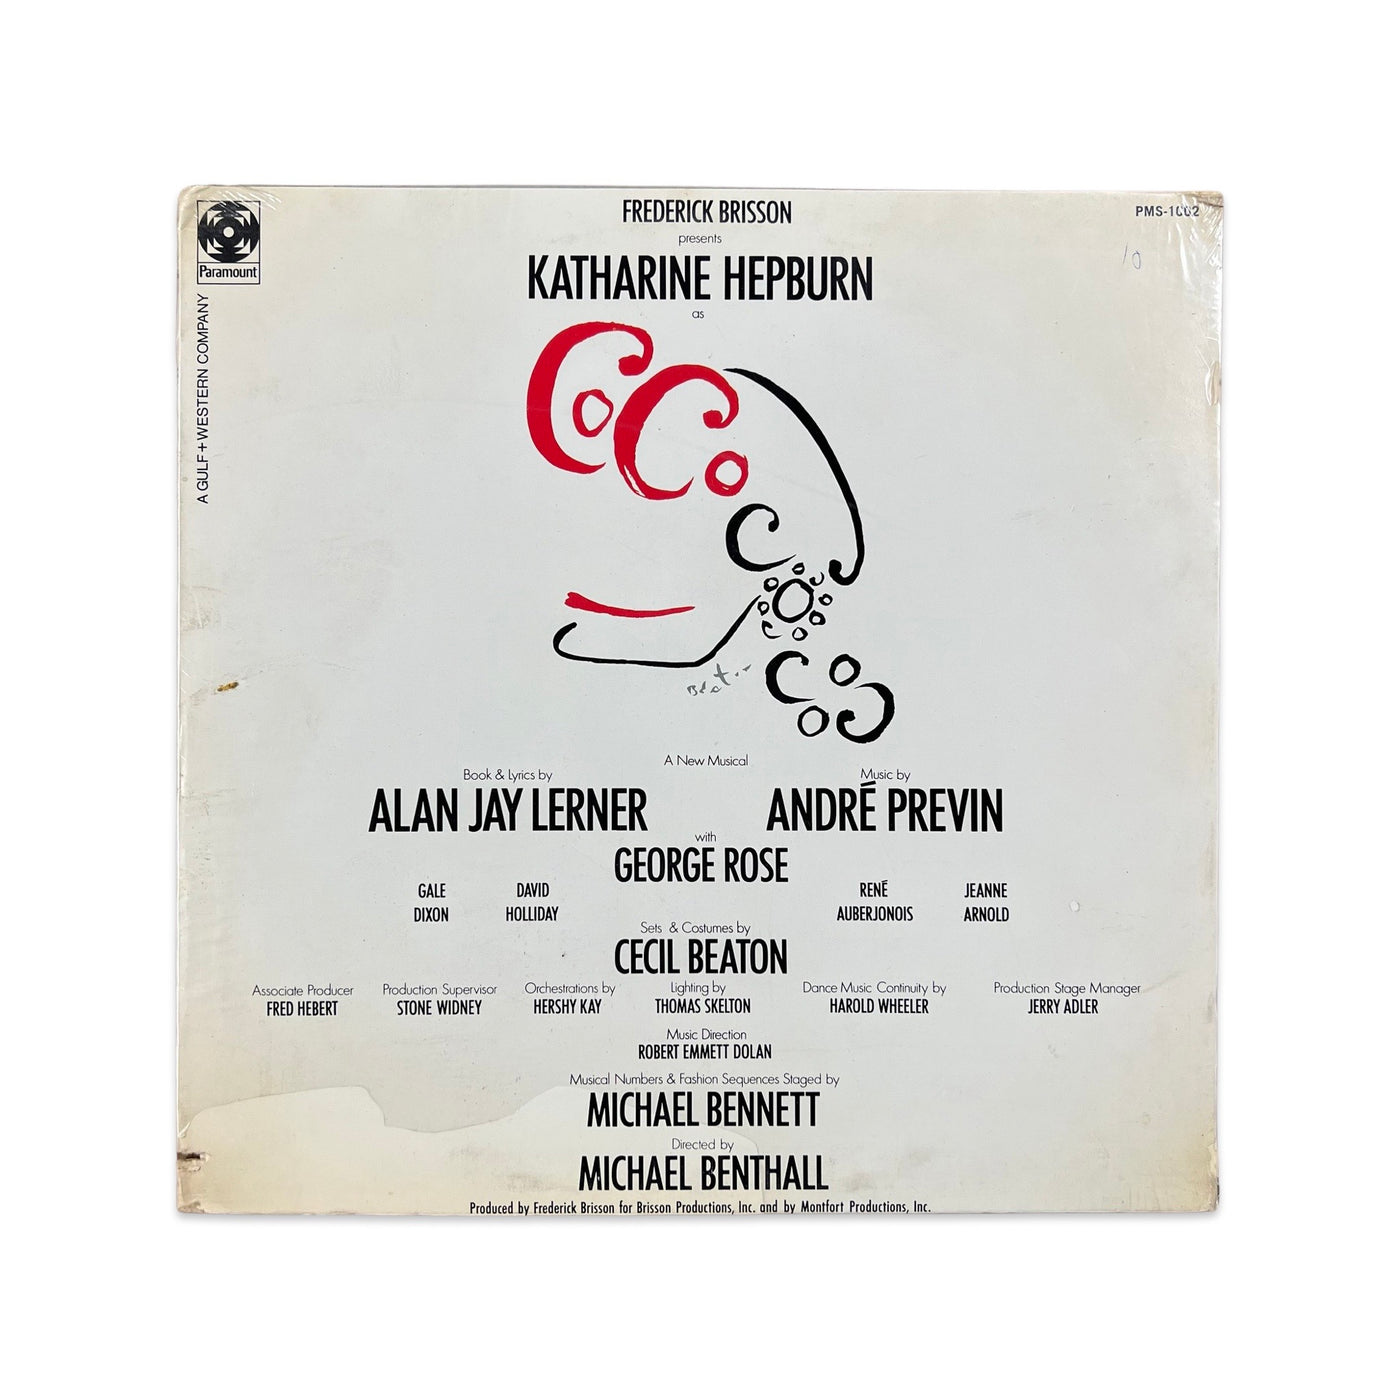 Katharine Hepburn - Coco - The Original Broadway Cast Recording